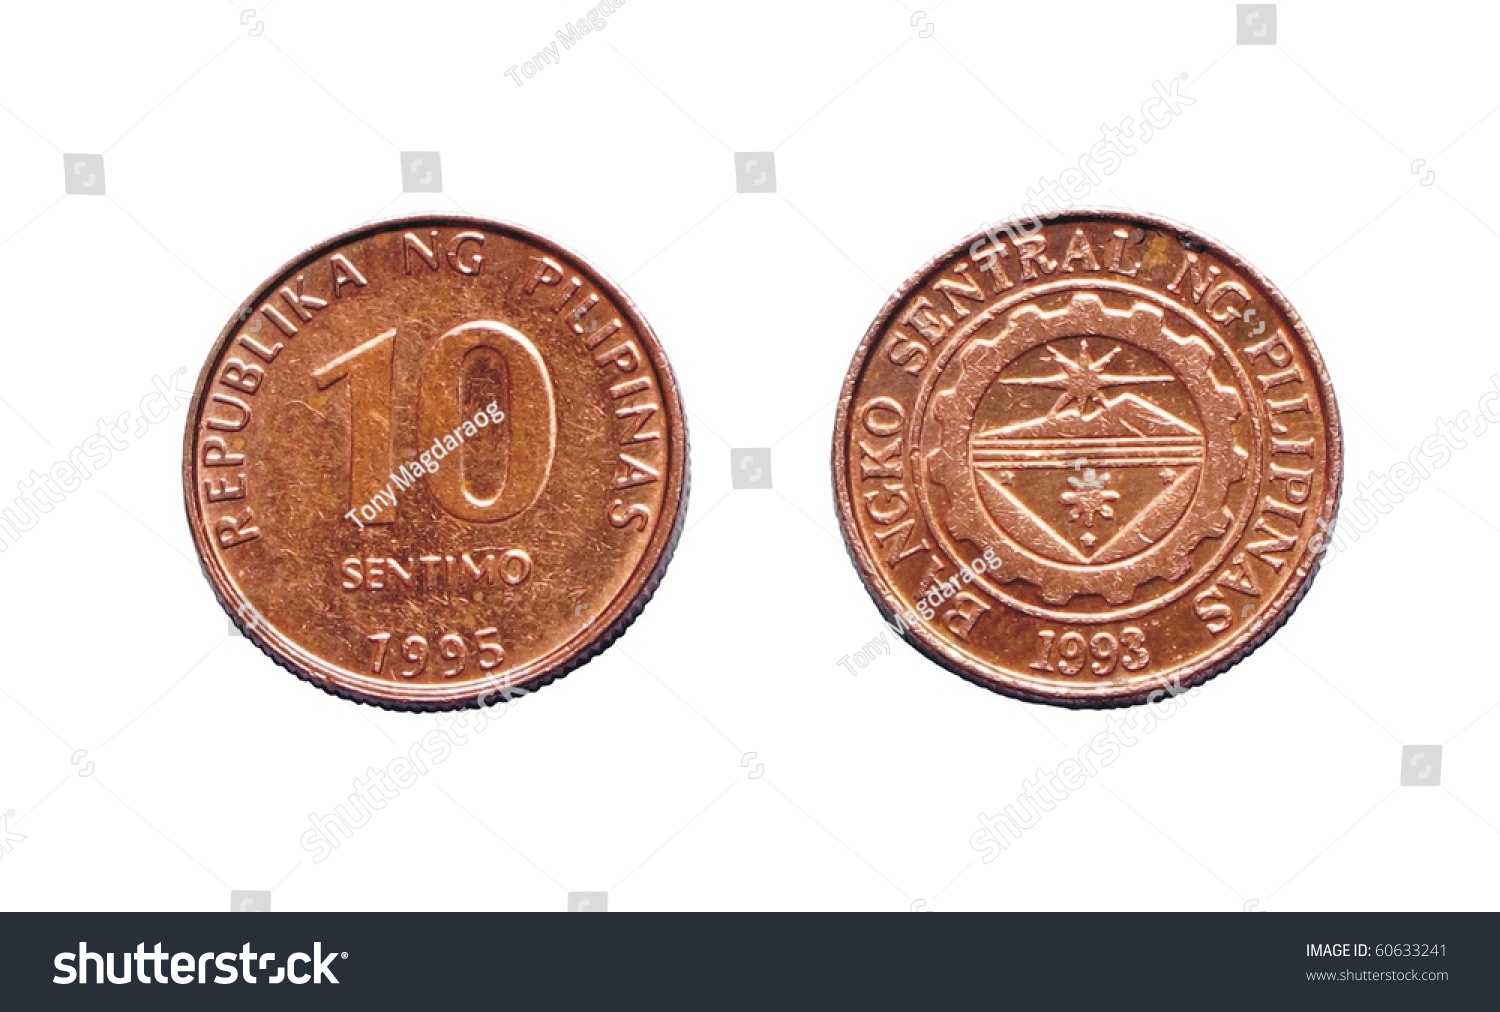 clipart philippine money - photo #17